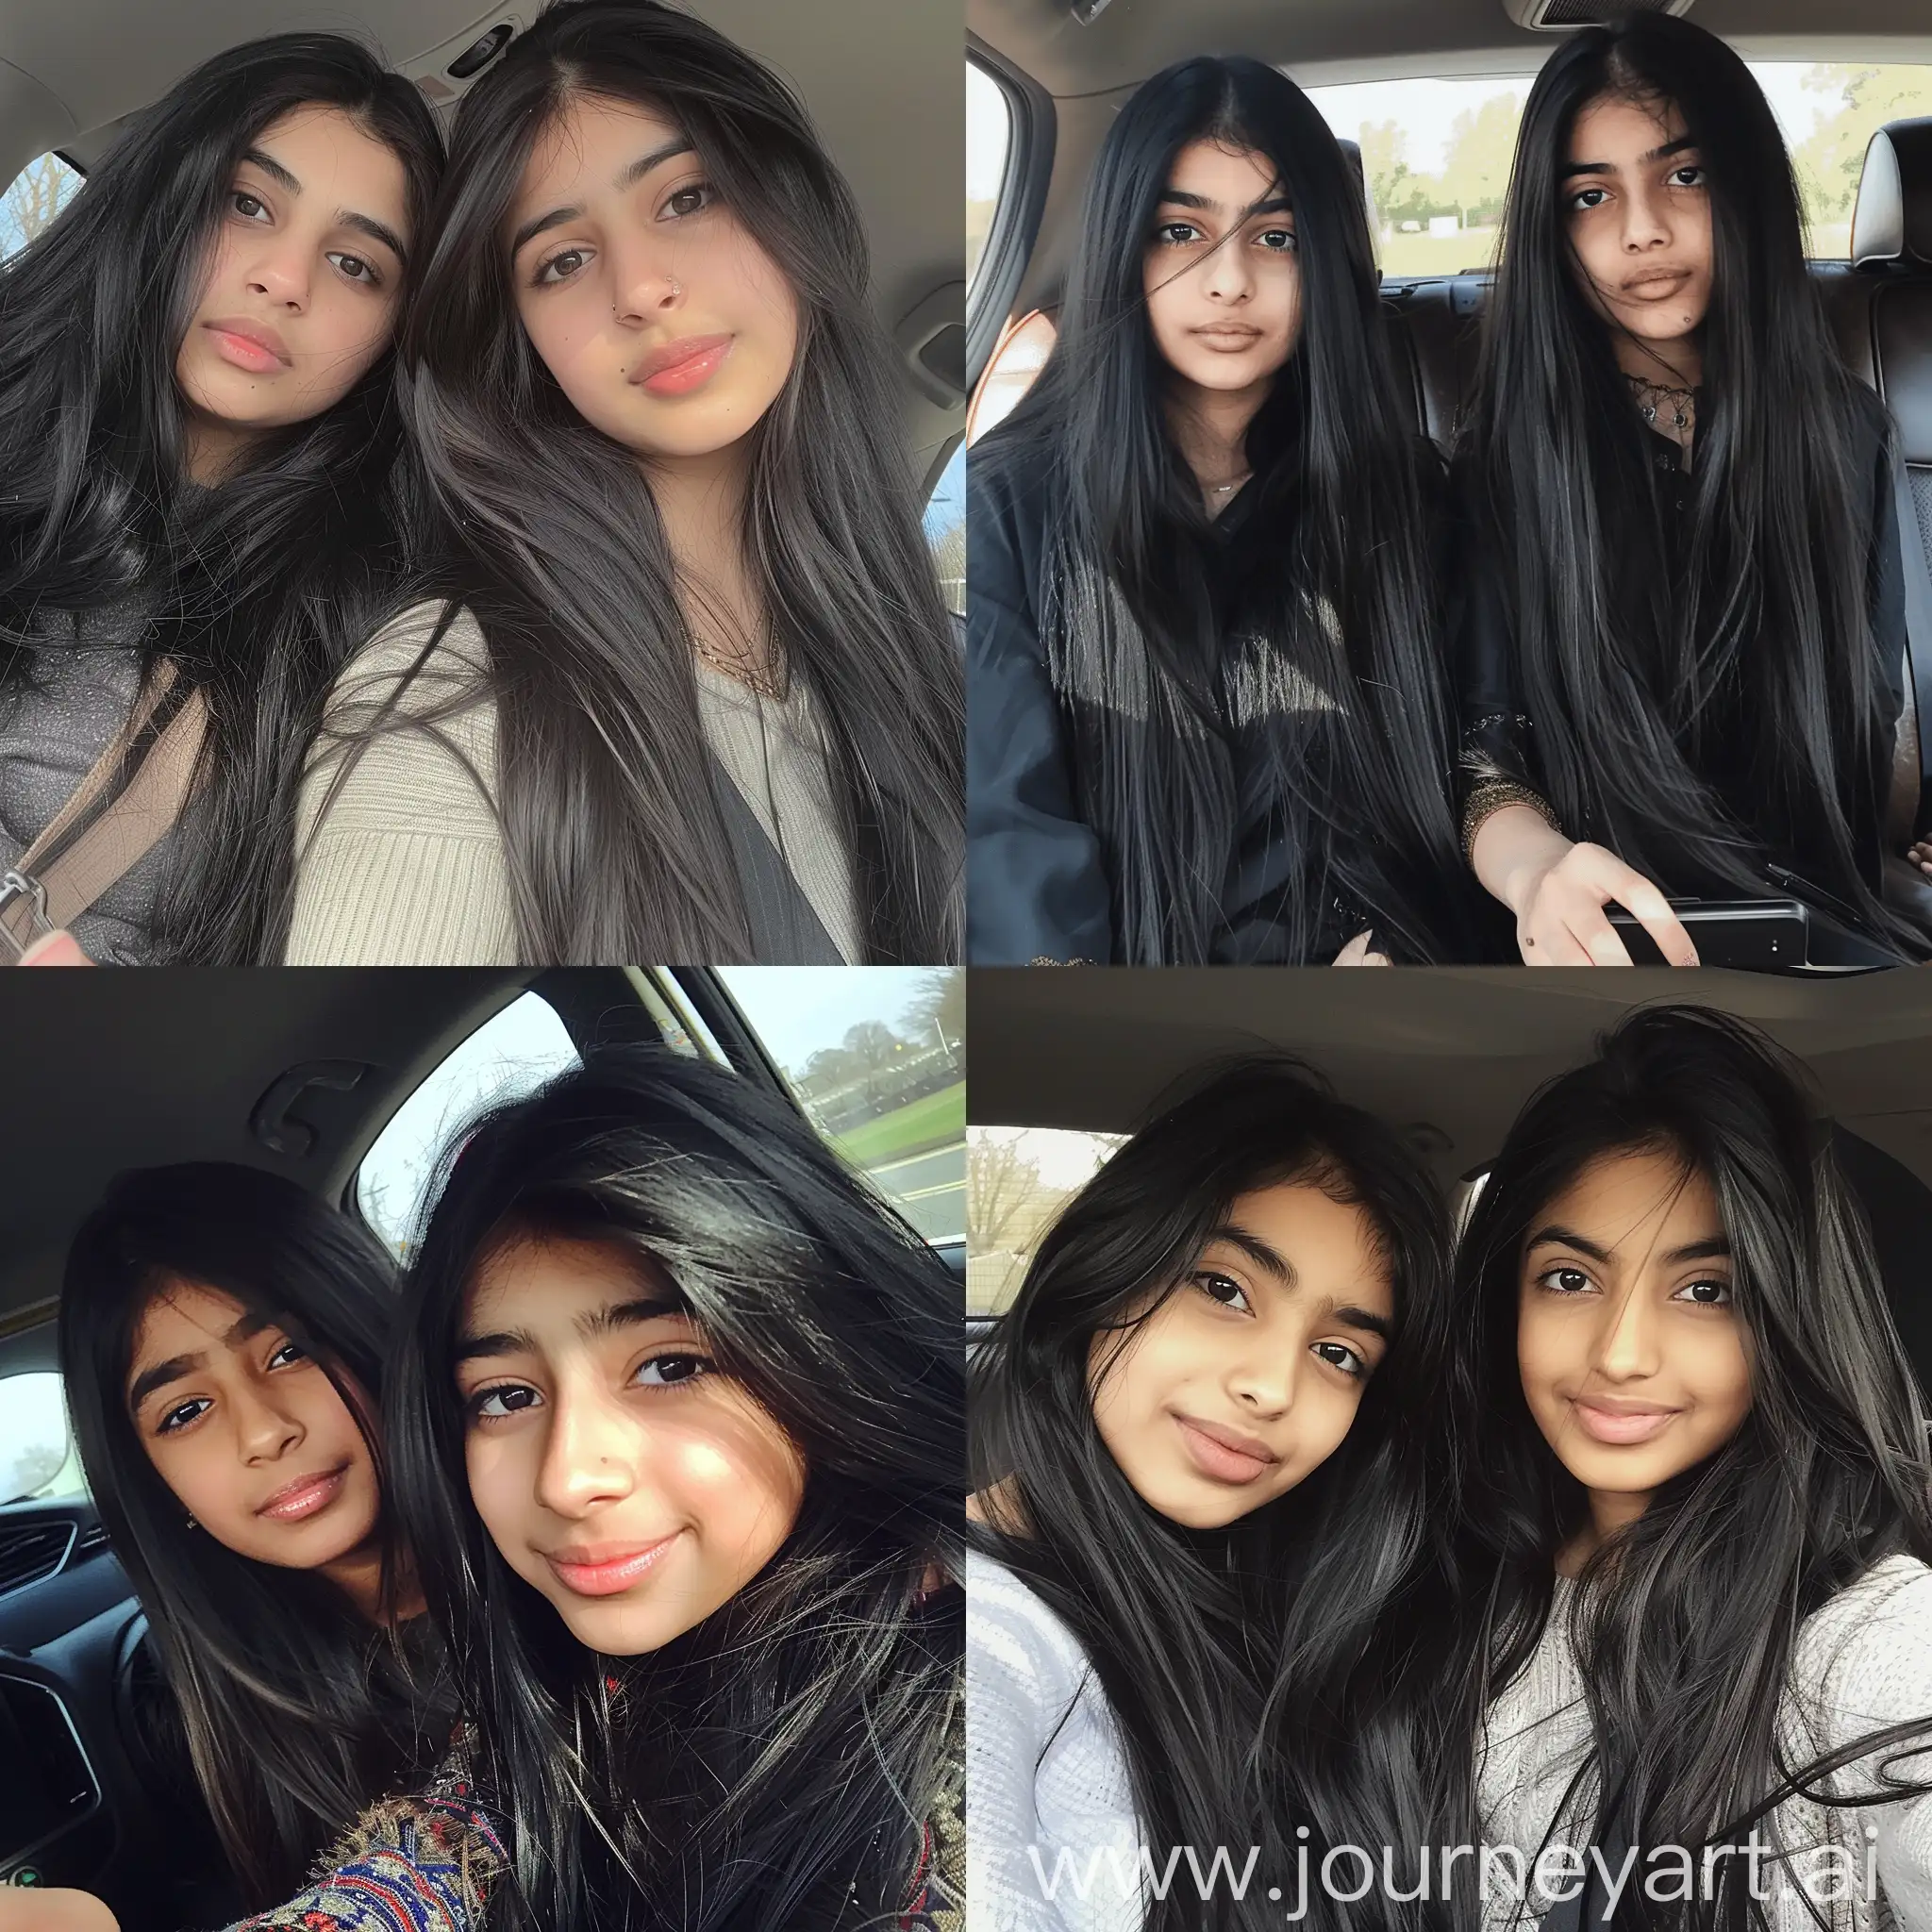 British-Pakistani-Girls-with-Long-Black-Hair-Taking-Selfie-in-a-Car